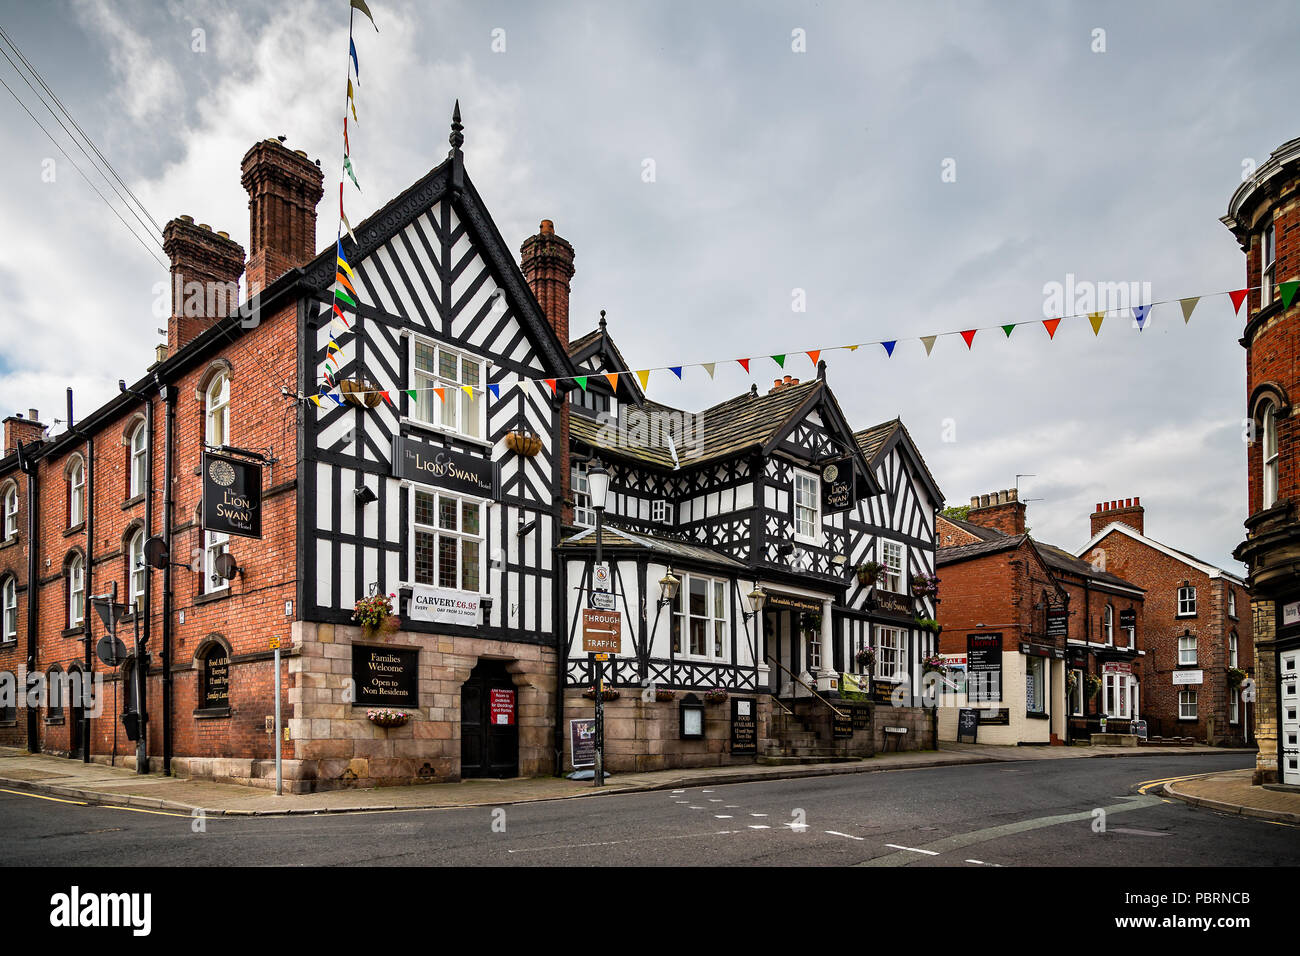 The Lion & Swan Hotel, half timbered tudor pub in Congleton, Cheshire, UK taken on 3 September 2014 Stock Photo